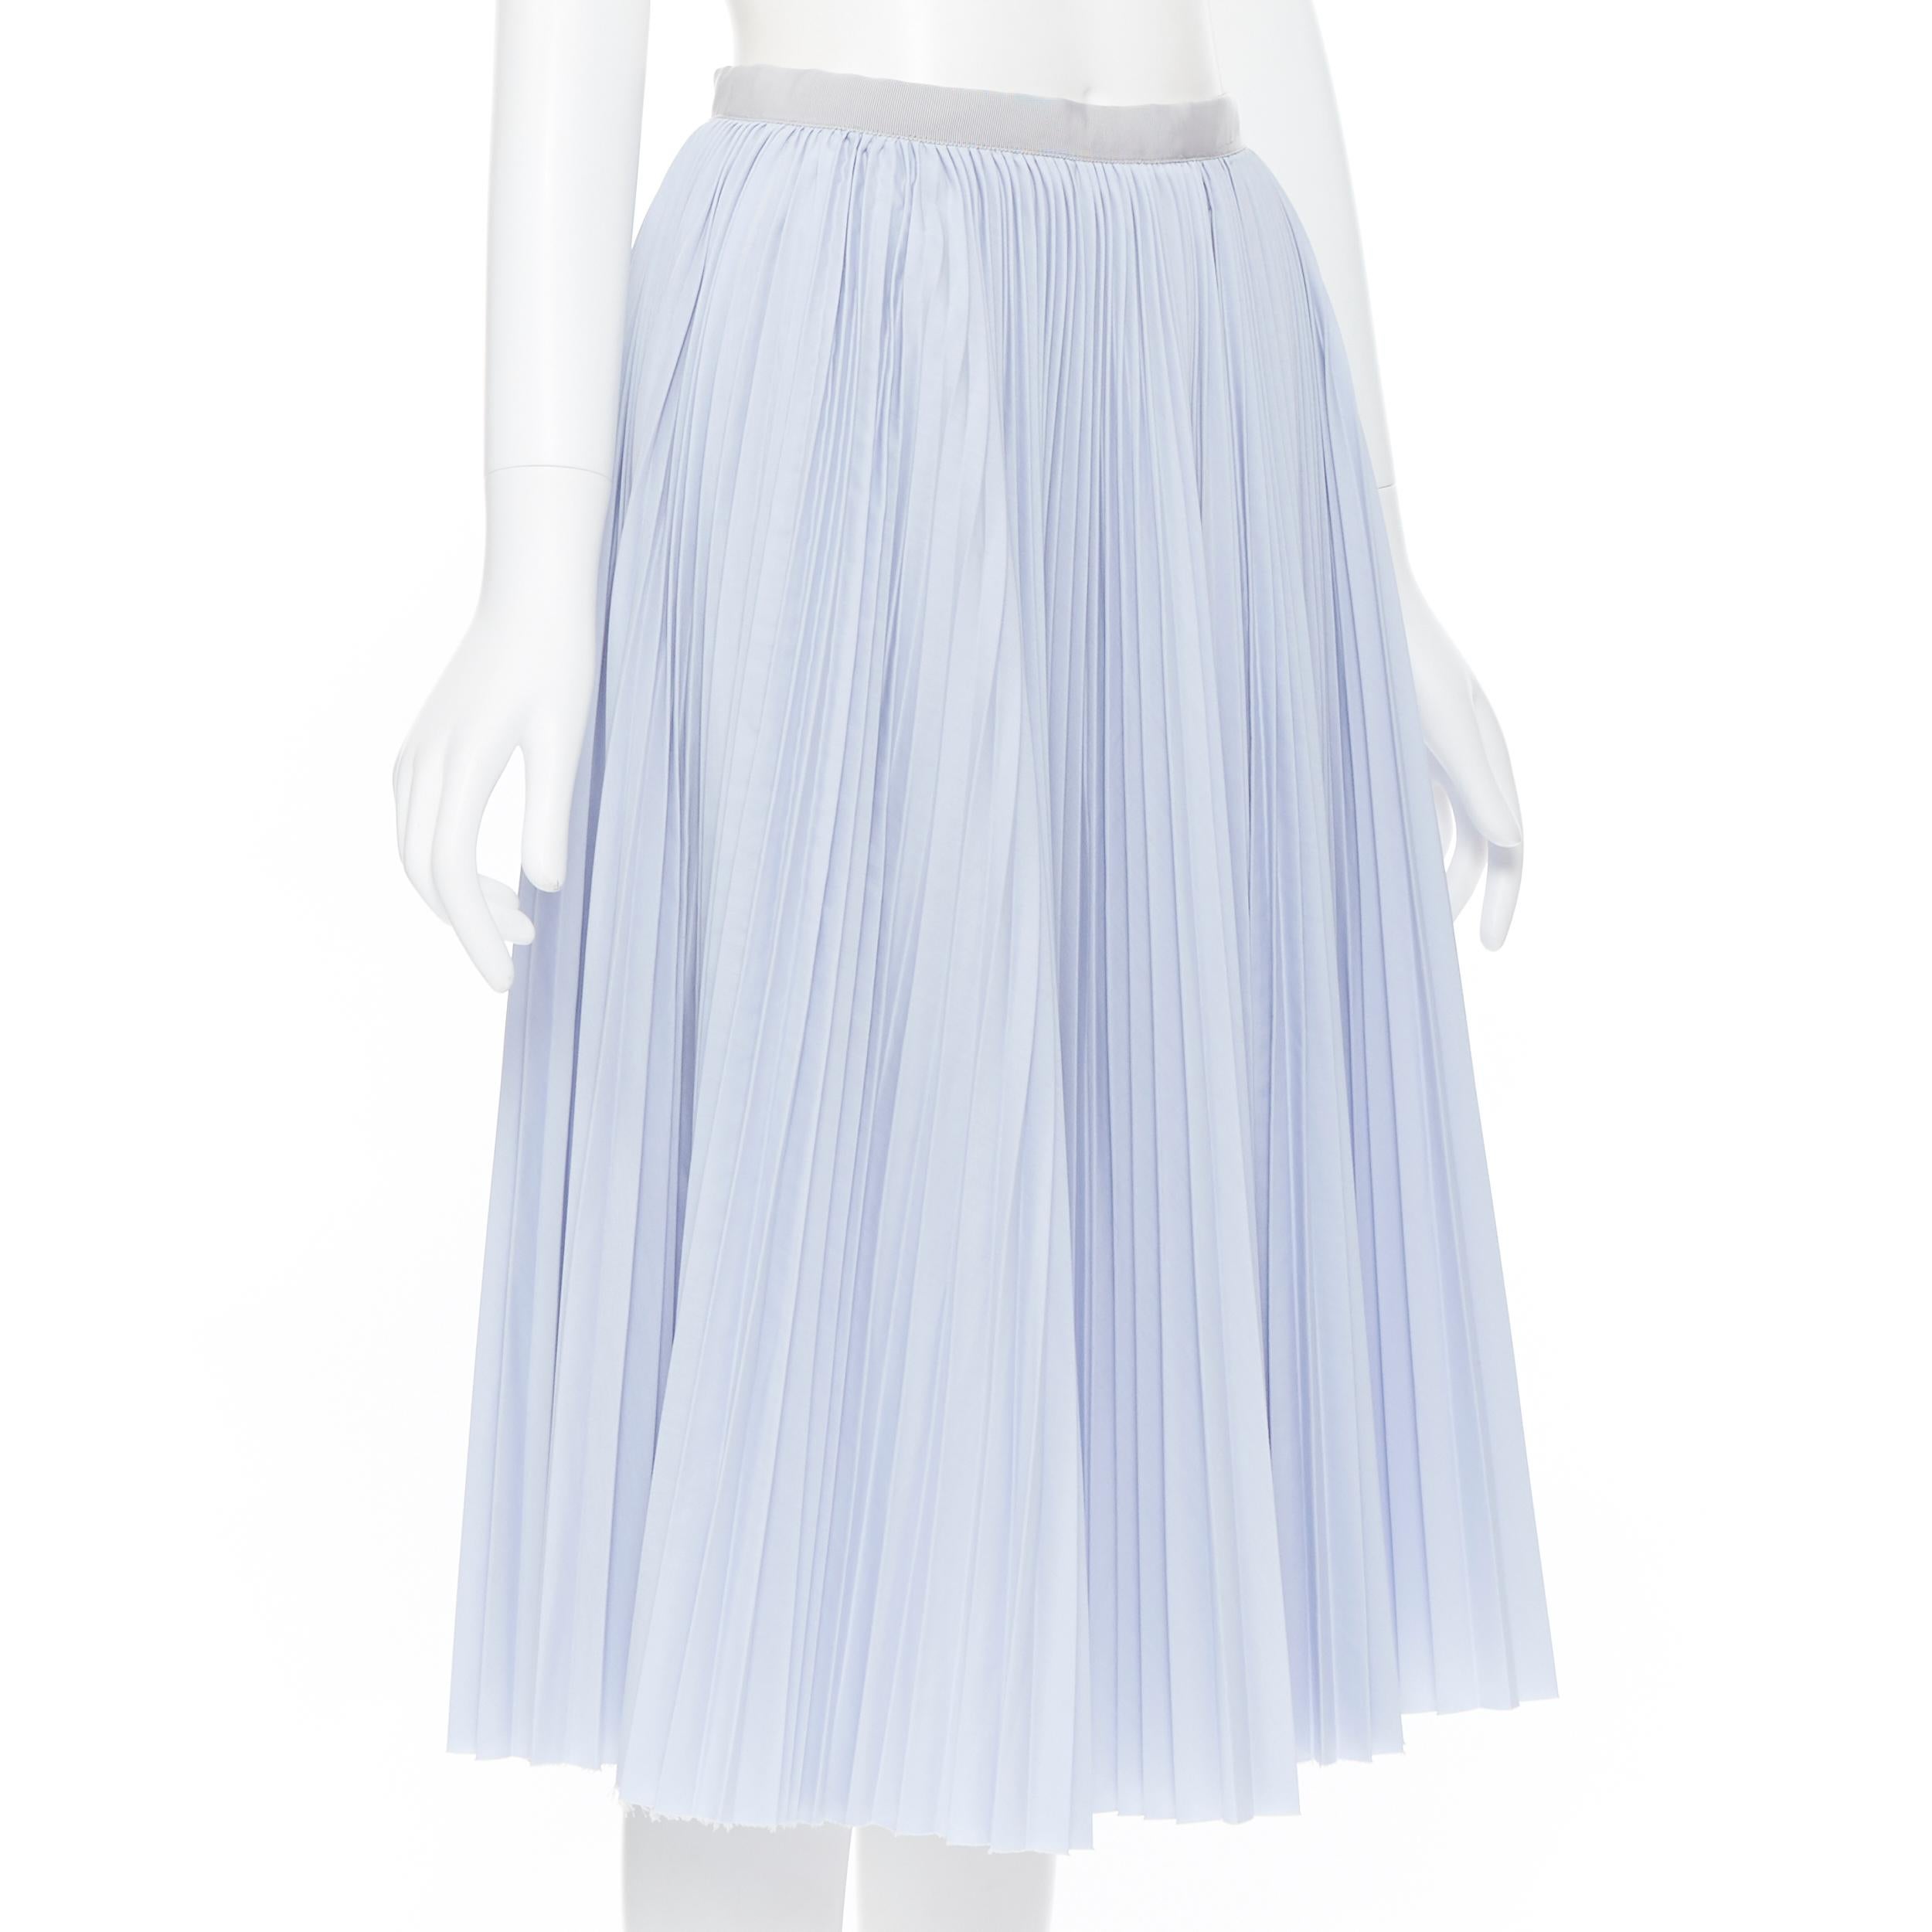 Blue SACAI LUCK grey lace trim skirt blue cotton pleated high slit knee skirt JP1 24